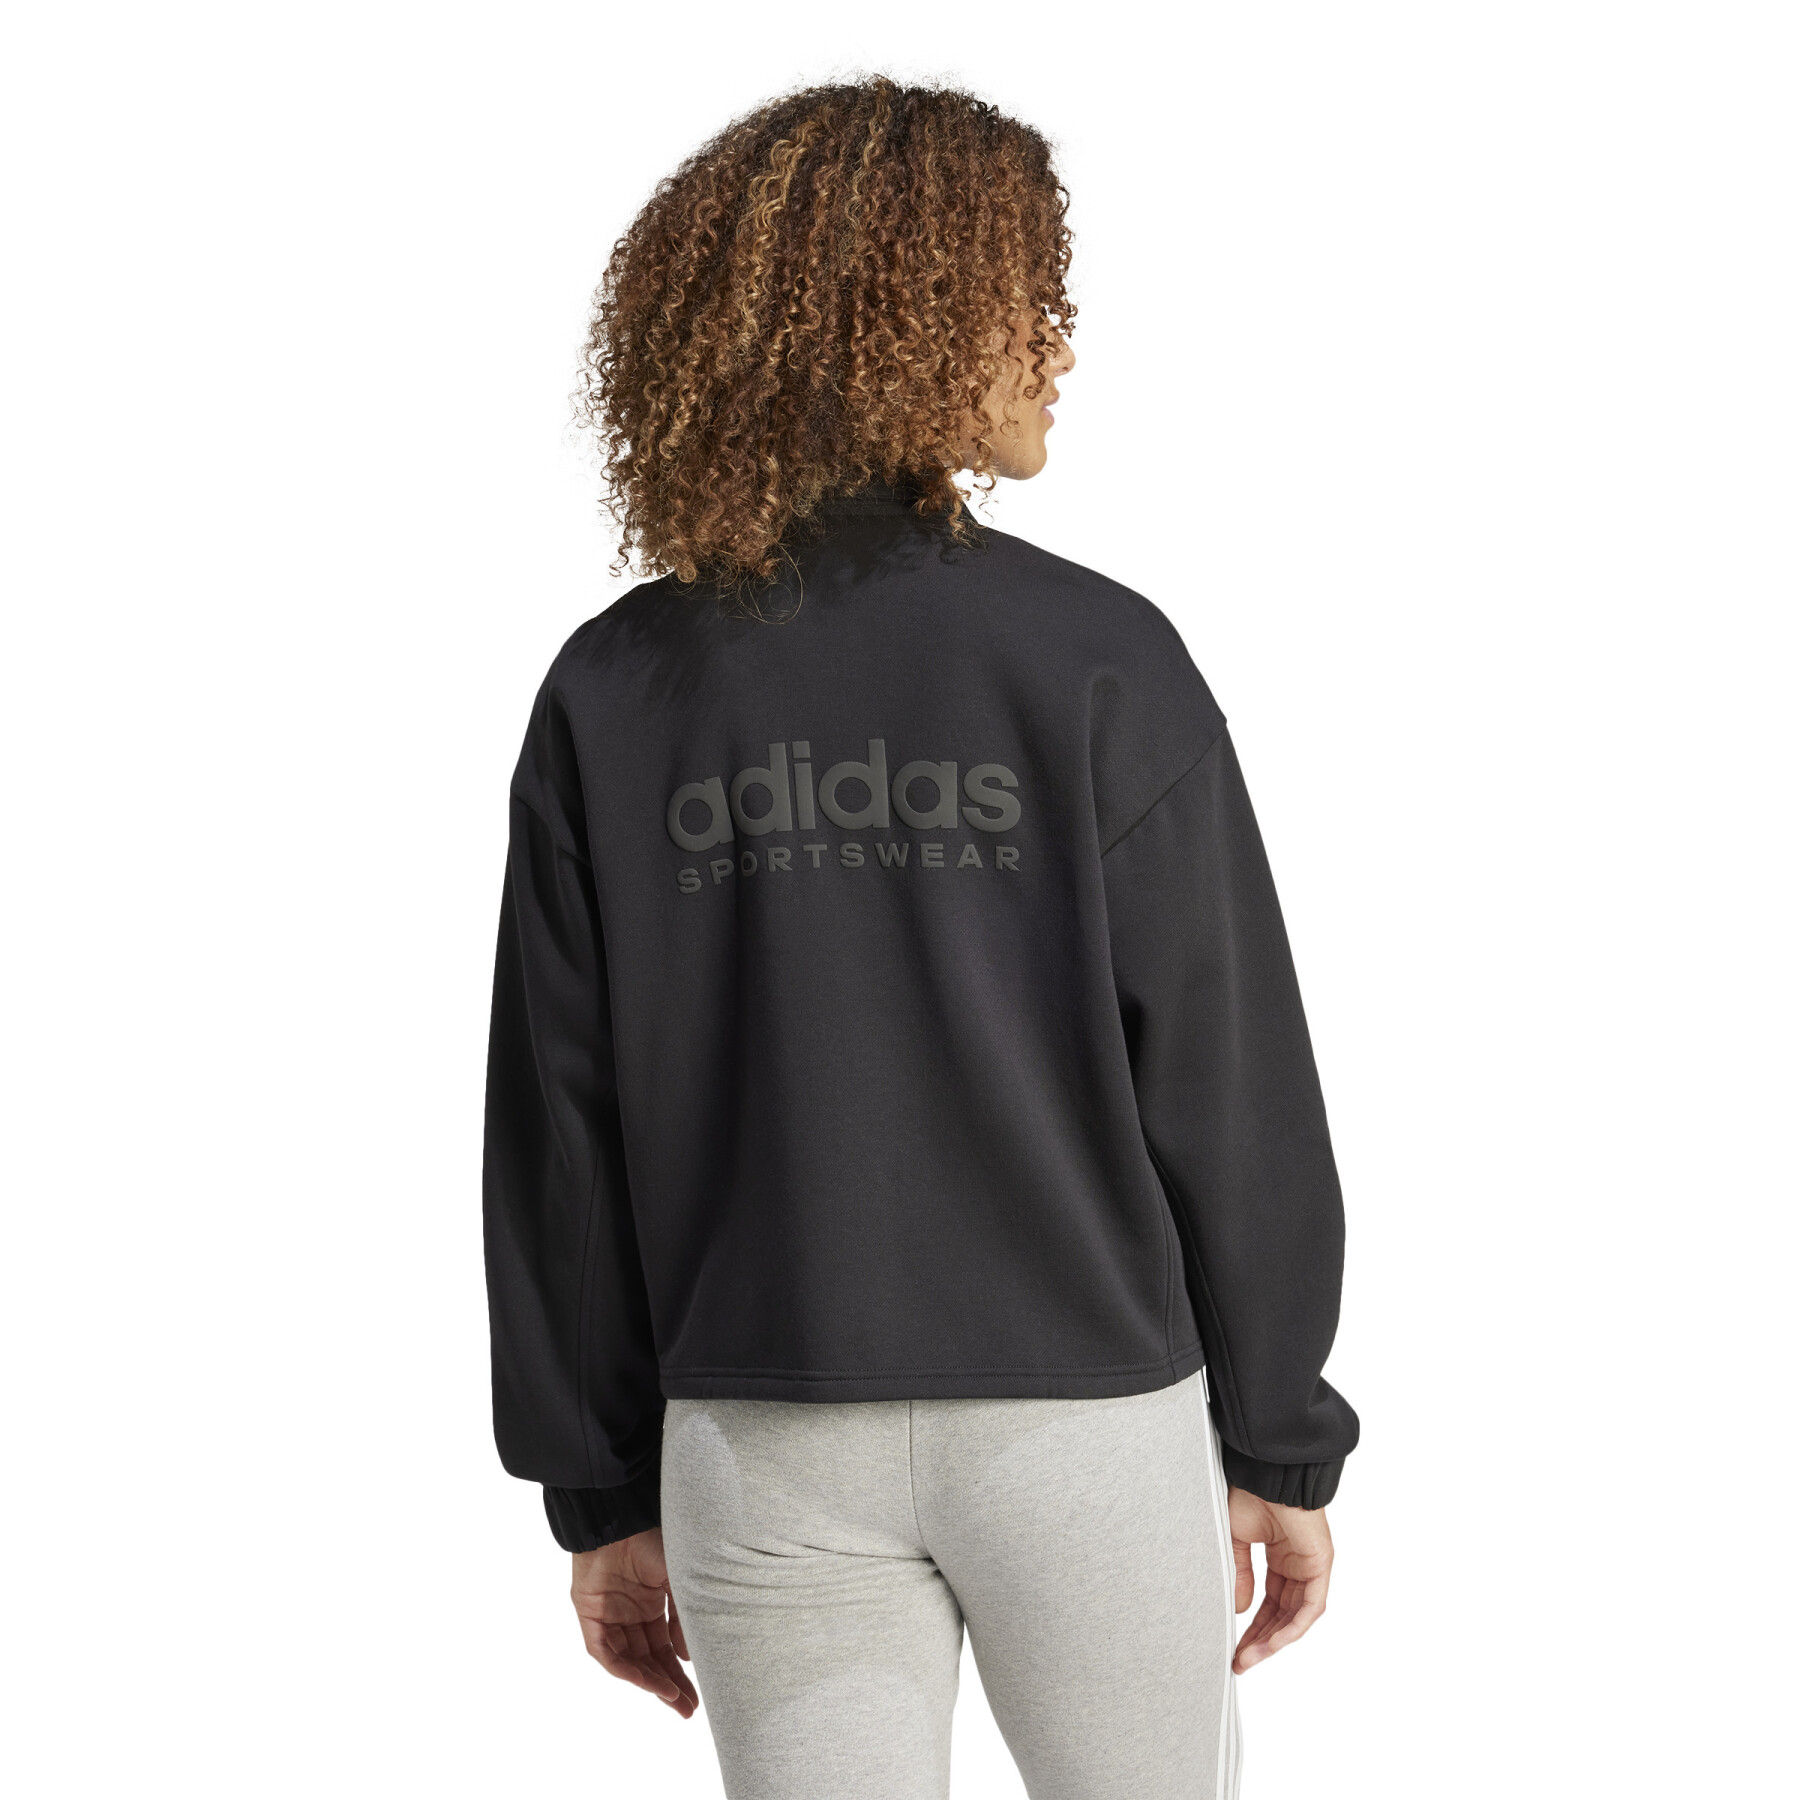 Women\'s - ALL jacket Lifestyle Lifestyle - Women\'s Graphic Jackets - Fleece trainer SZN adidas